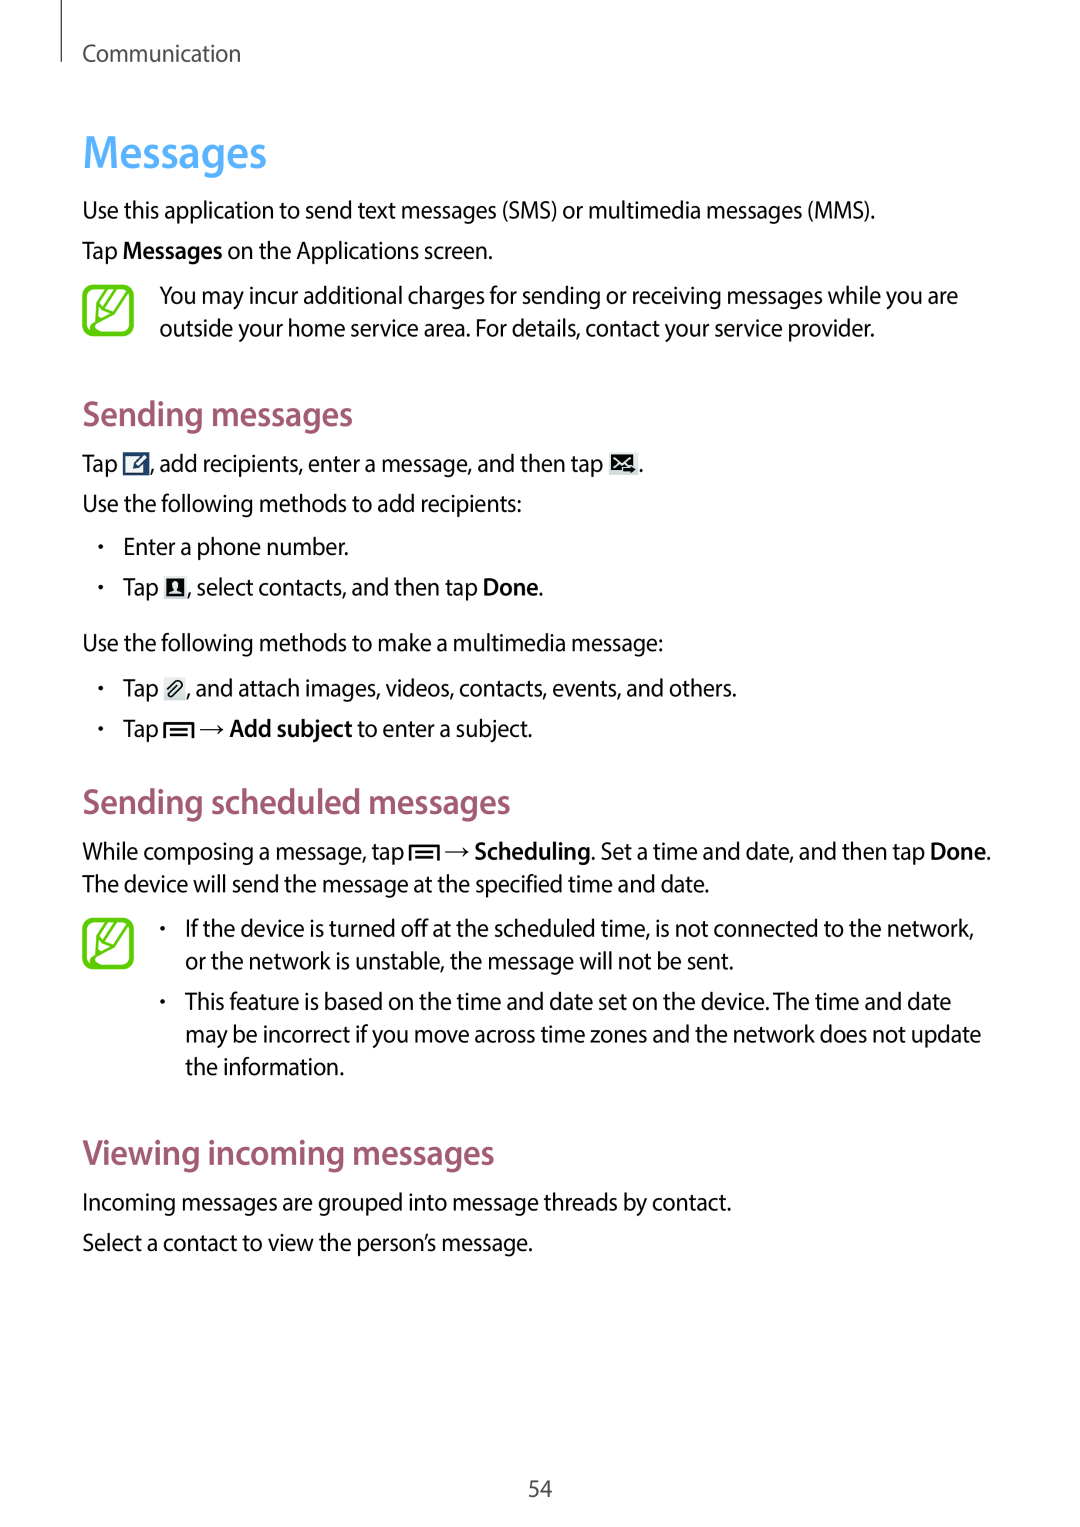 Samsung SM-G7105ZKAXEF Messages, Sending messages, Sending scheduled messages, Viewing incoming messages, Communication 